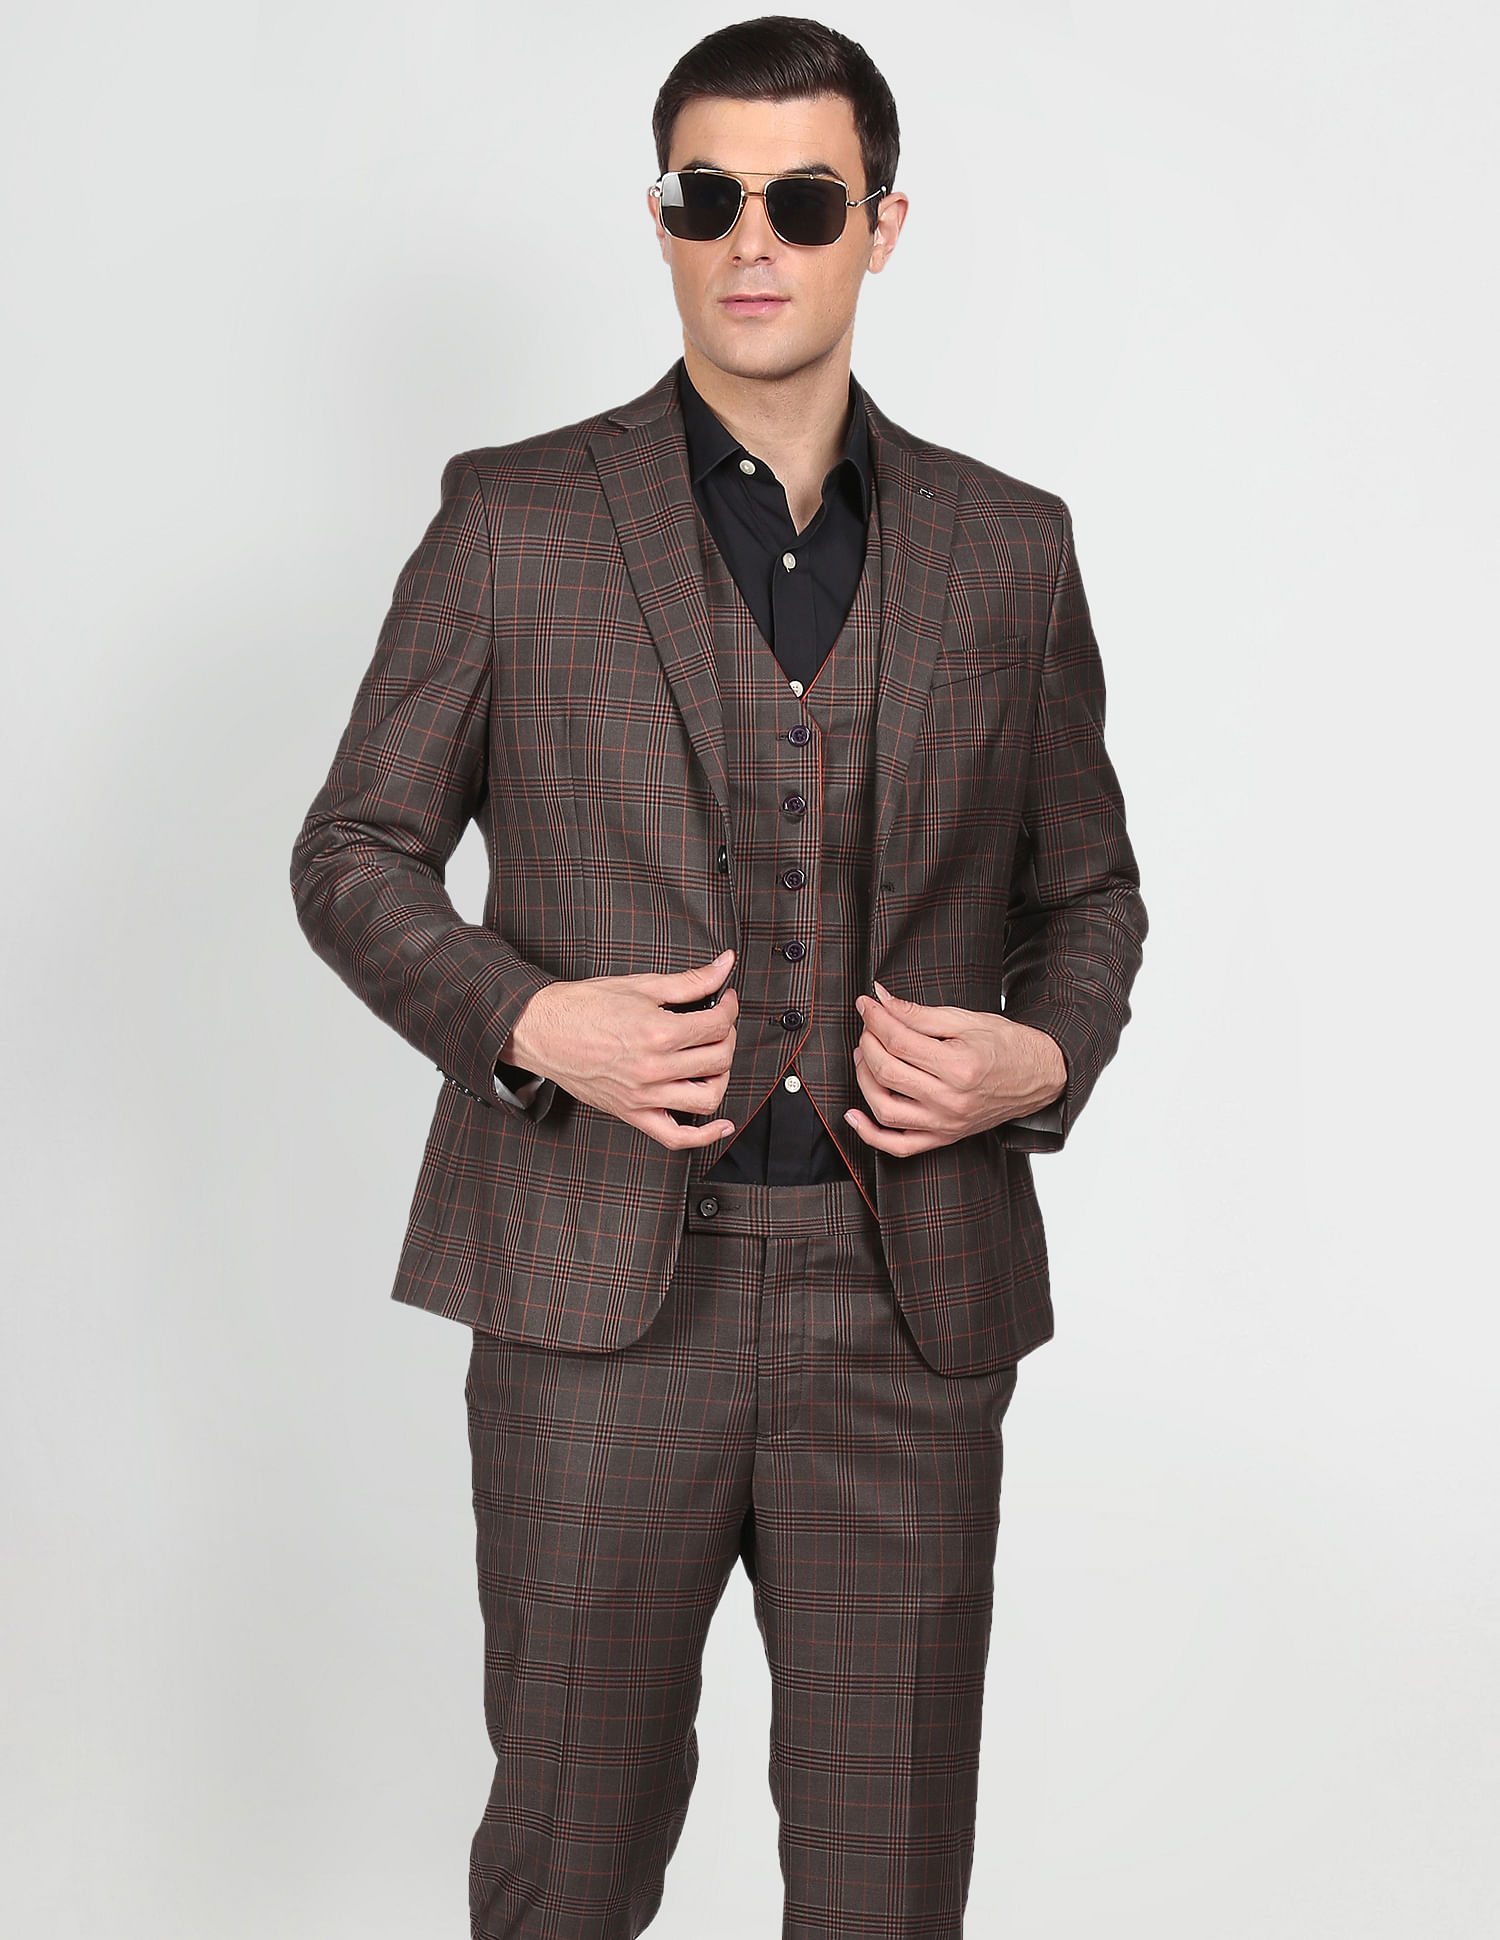 Mens Check Retro Suit Blue Grey Tailored Fit Business Wedding Formal 3 Piece  Set | eBay